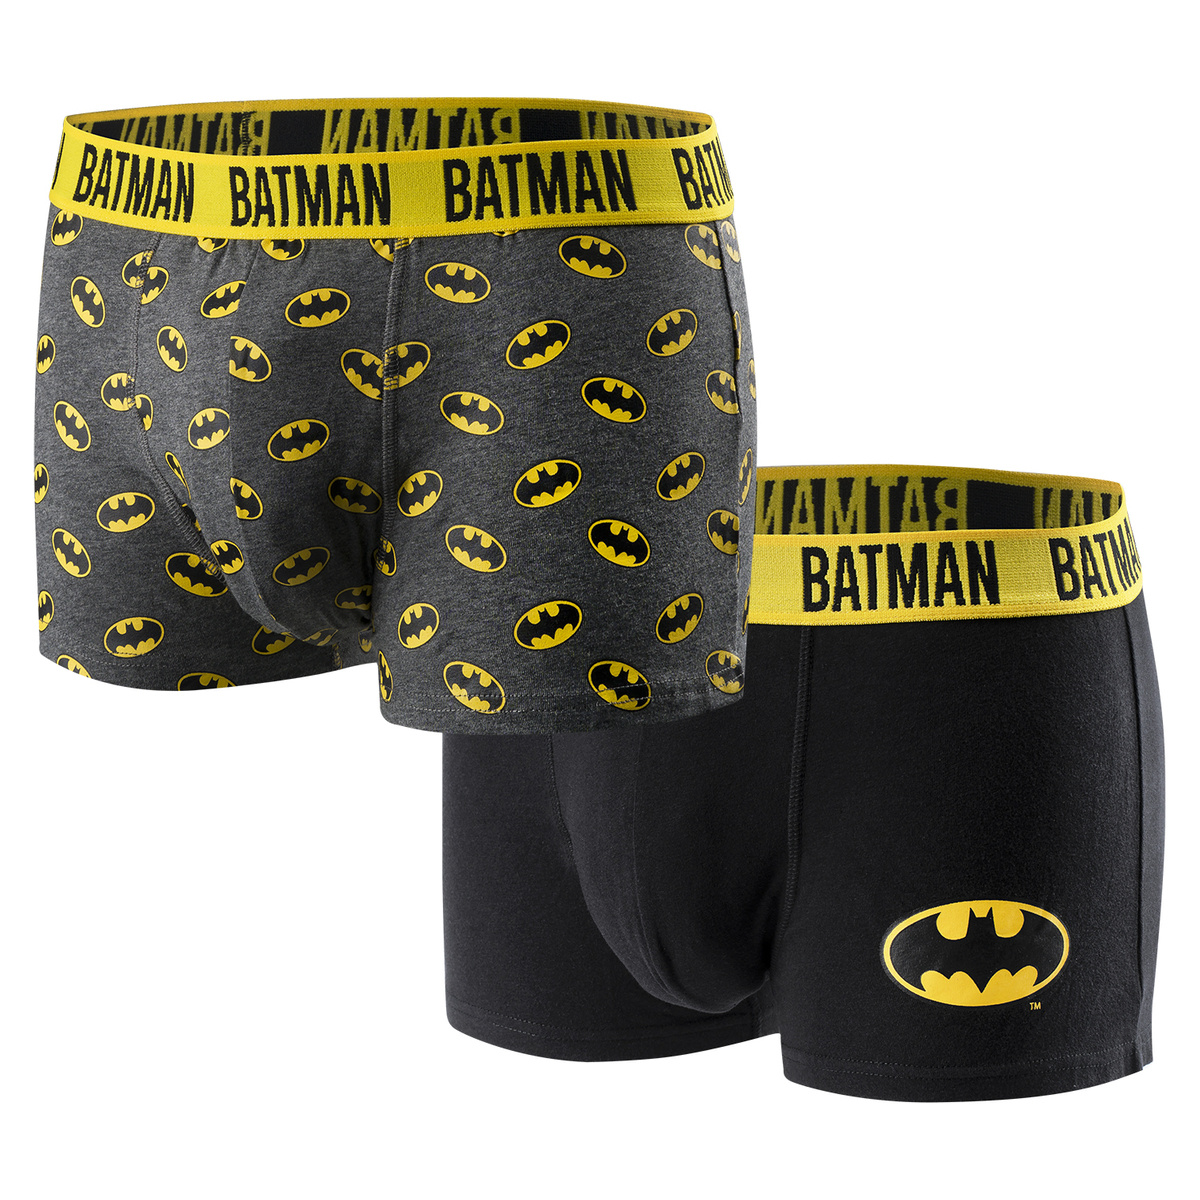 https://soxo.pl/eng_pl_Set-of-2x-Batman-boxer-shorts-Gift-idea-Boys-Day-Cotton-panties-23957_5.jpg